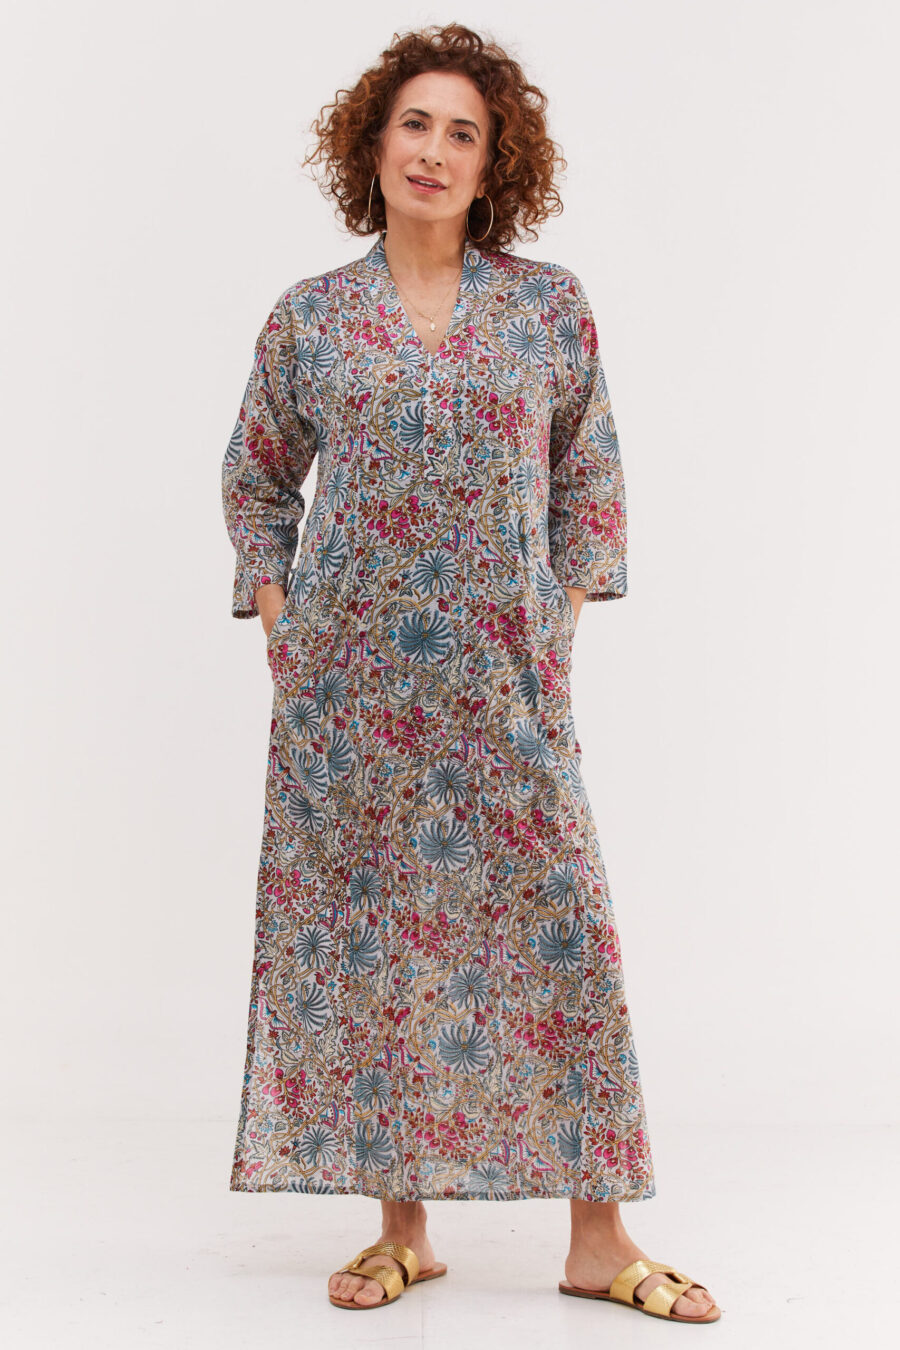 Jalabiya dress | Uniquely designed dress - Libi print, serene floral print on a grey dress by comfort zone boutique